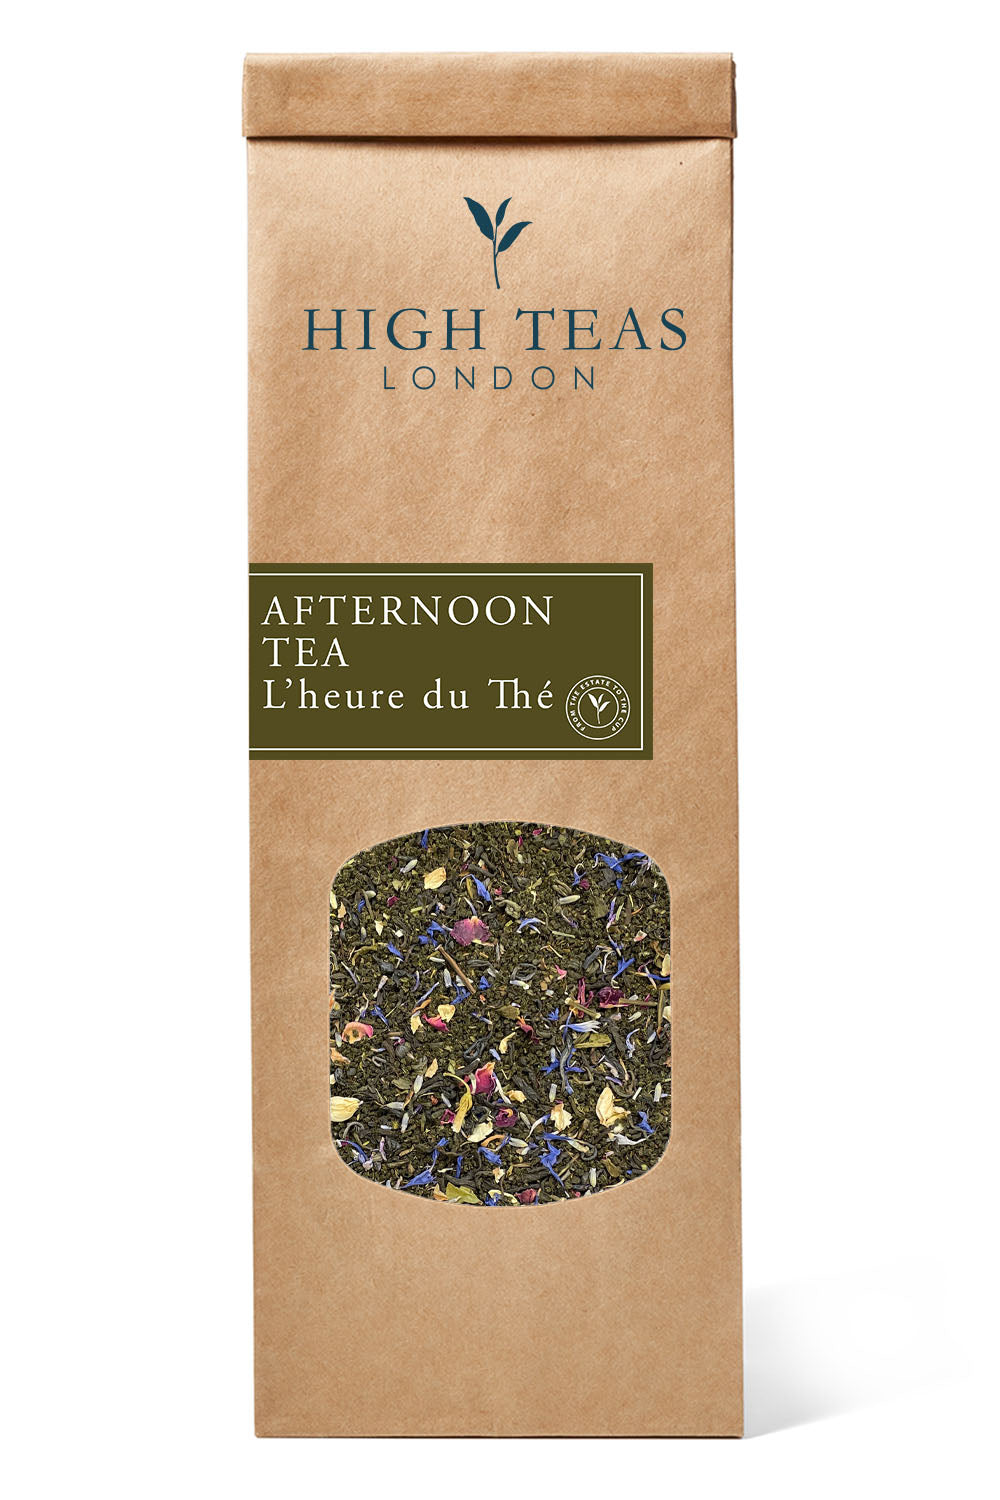 French Afternoon Tea, aka L'Heure du Thé.-50g-Loose Leaf Tea-High Teas